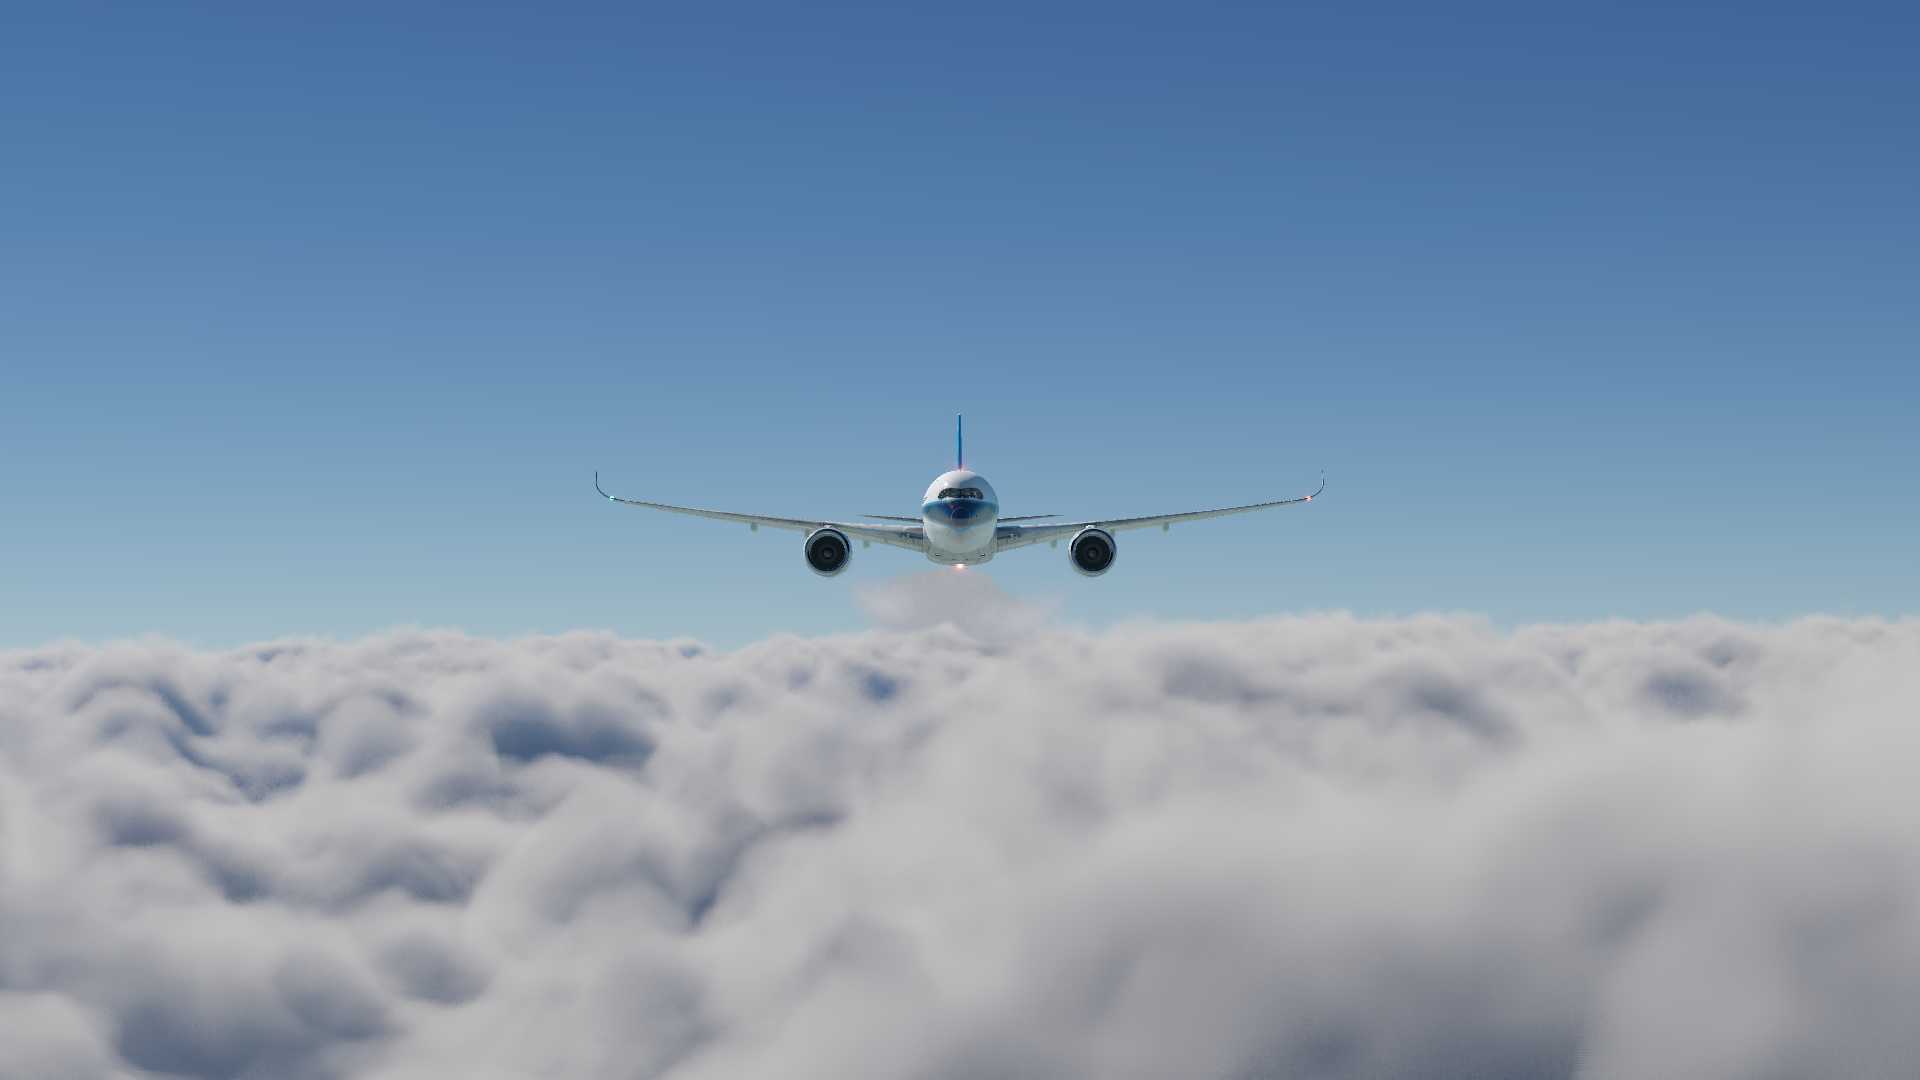 【X-Plane 11】航线上的风景-8121 